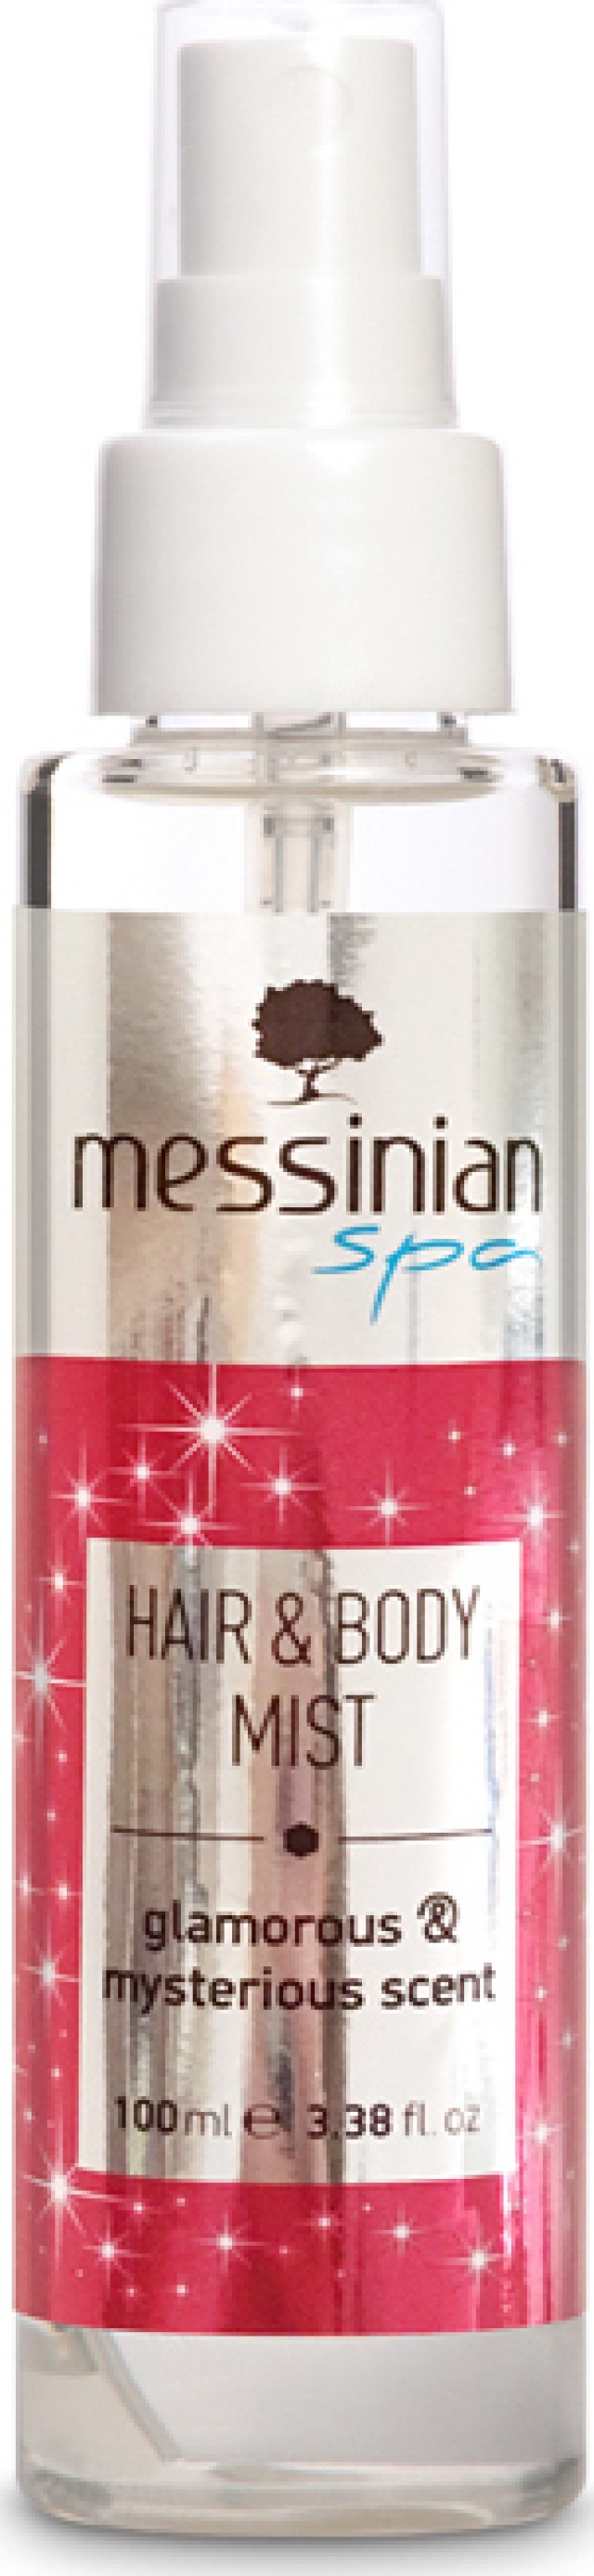 Messinian Spa Hair & Body Mist Glamorous & Mysterious Scent Eau Fraiche Αρωματικό Σπρέι για Μαλλιά & Σώμα 100ml